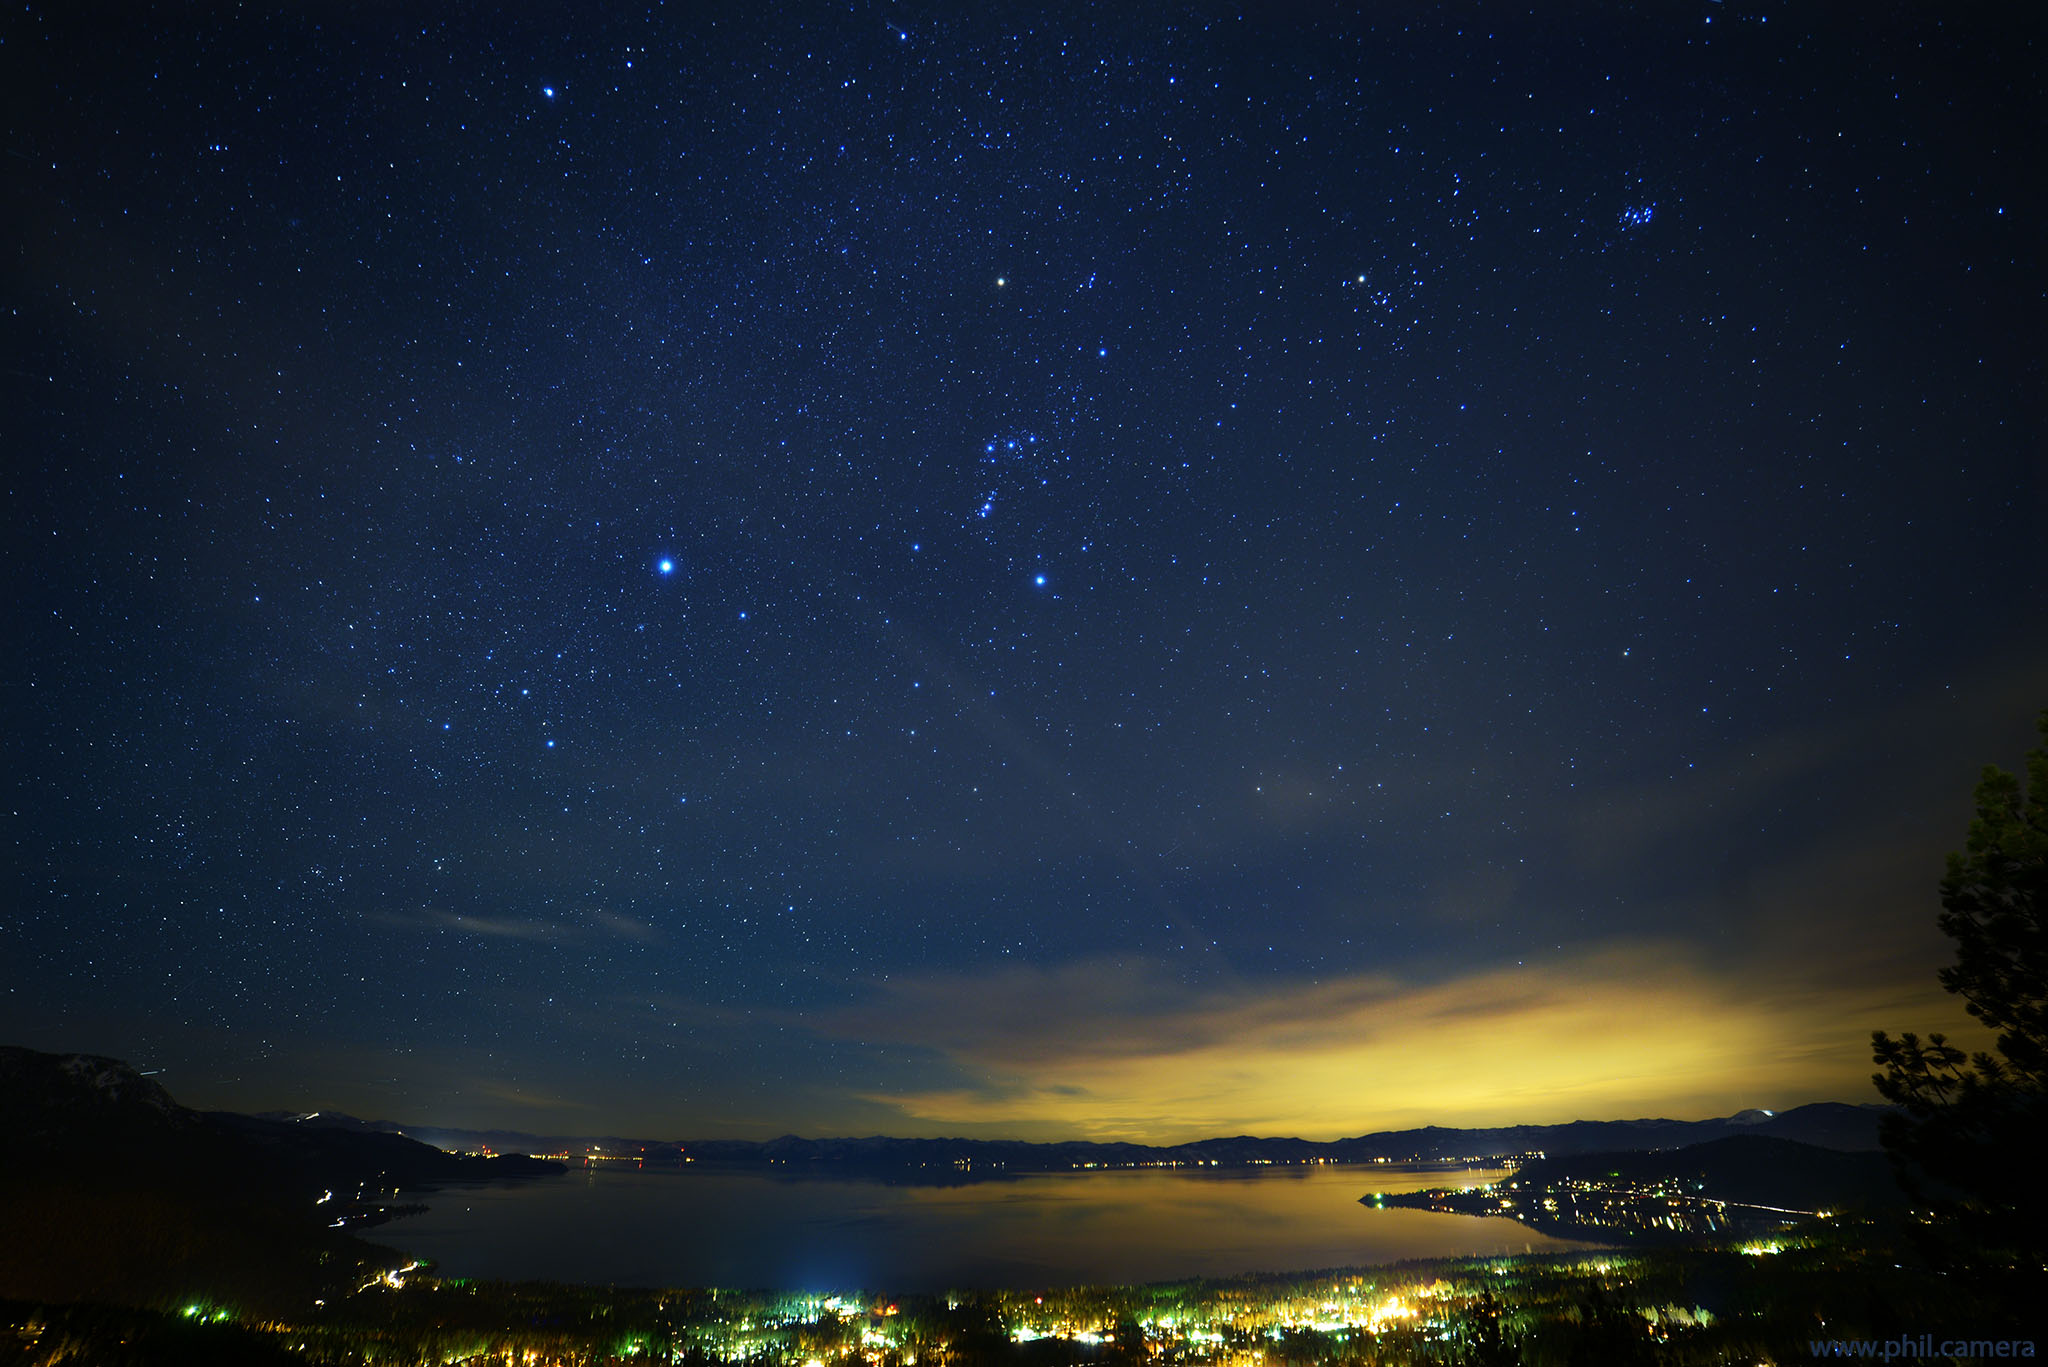 Winter Stars over Tahoe, looking So